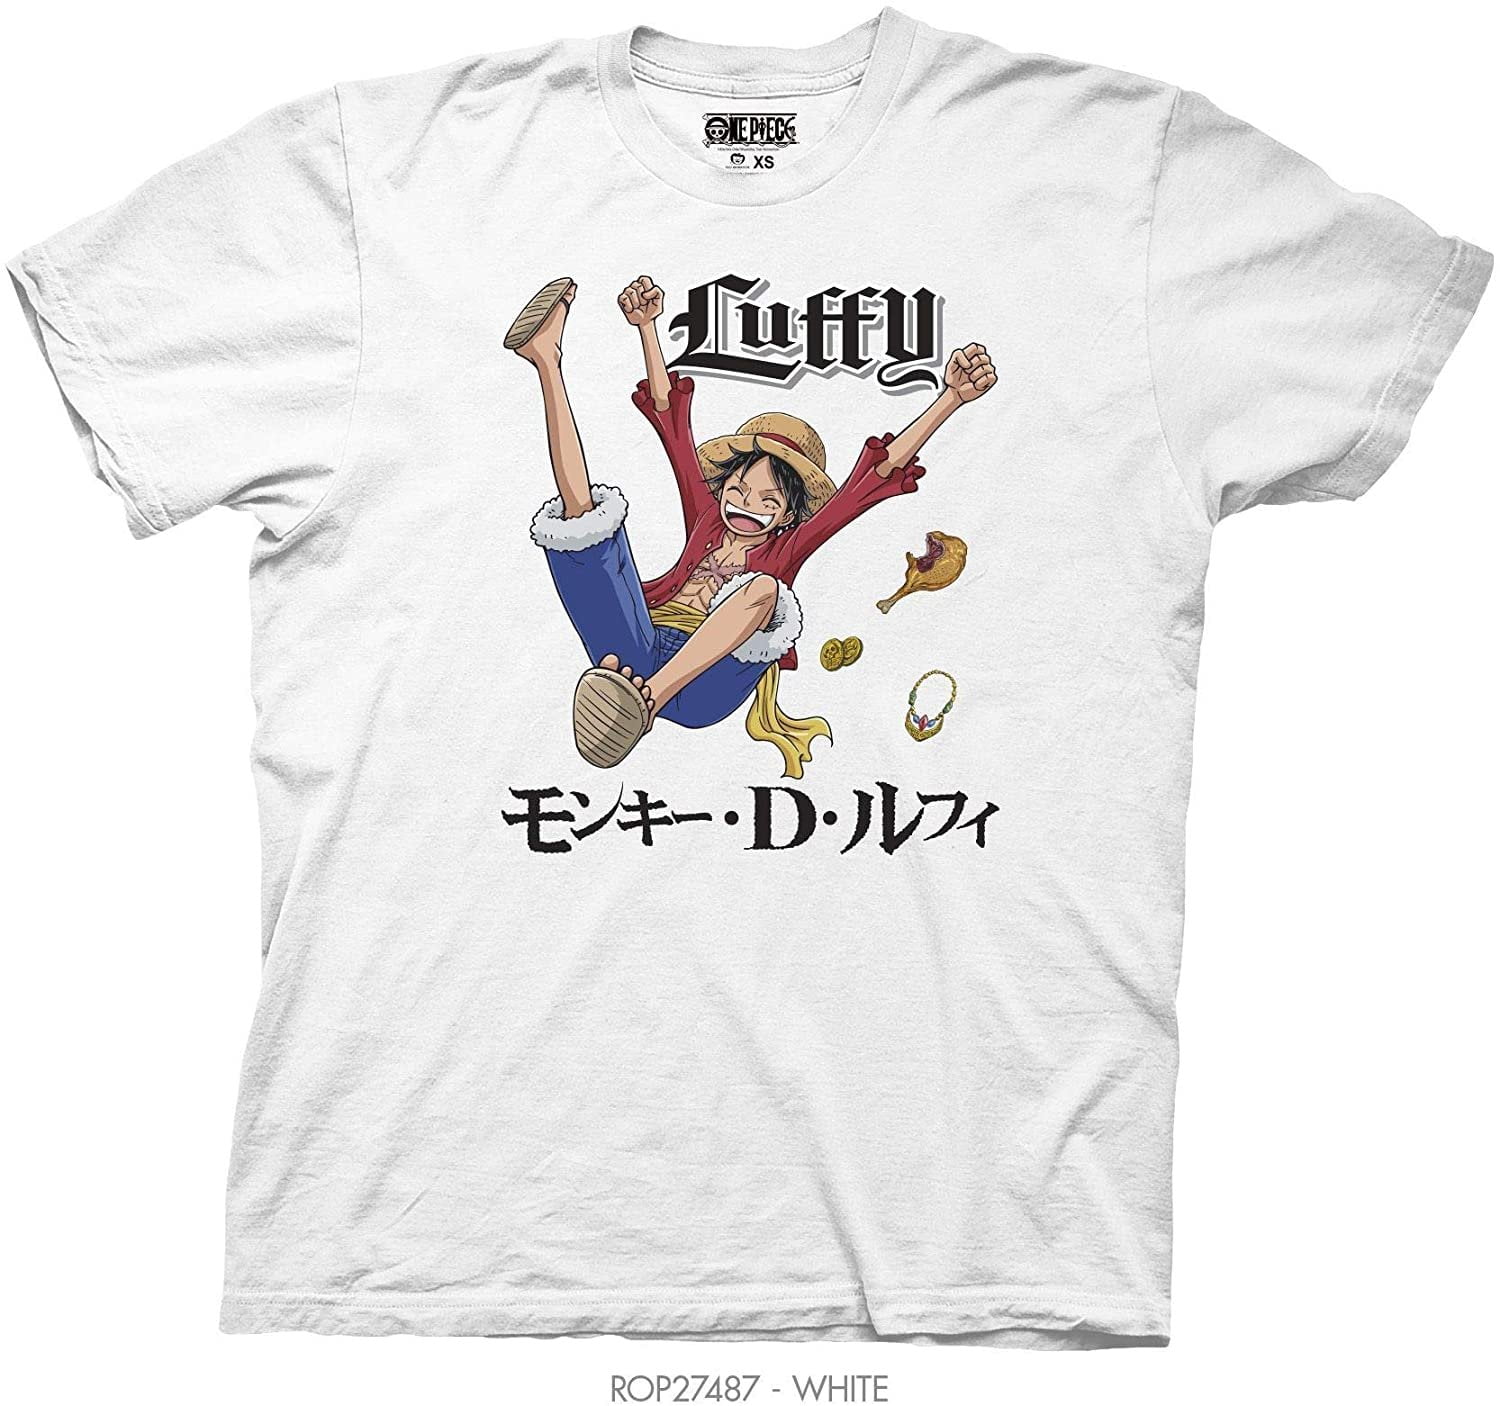 One Piece One Piece Marine T-shirt White L (Anime Toy